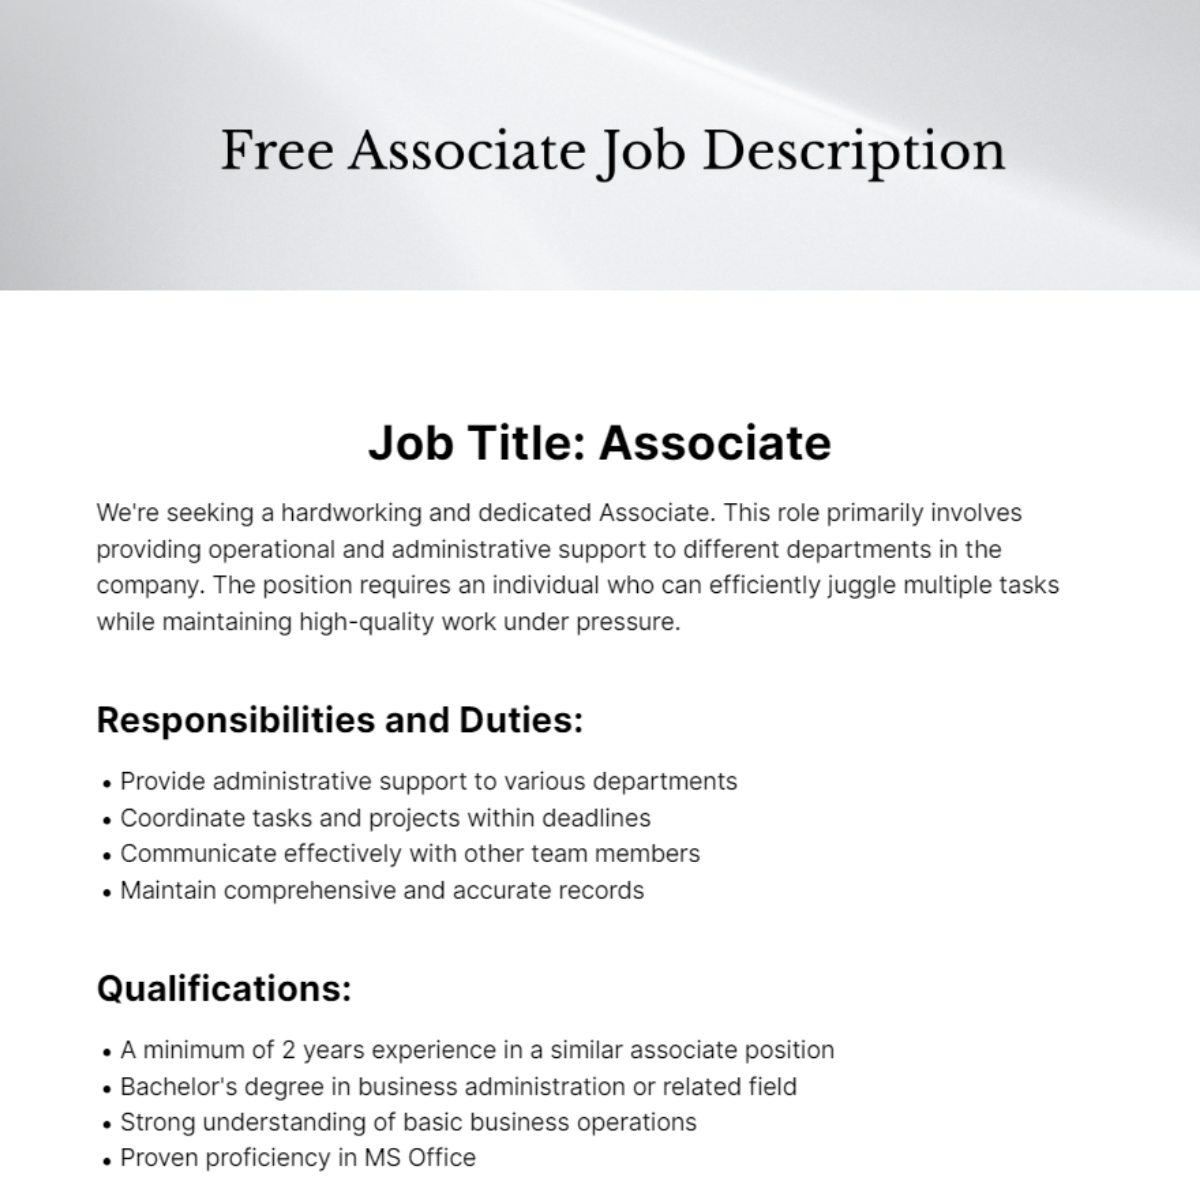 Free Associate Job Description Template